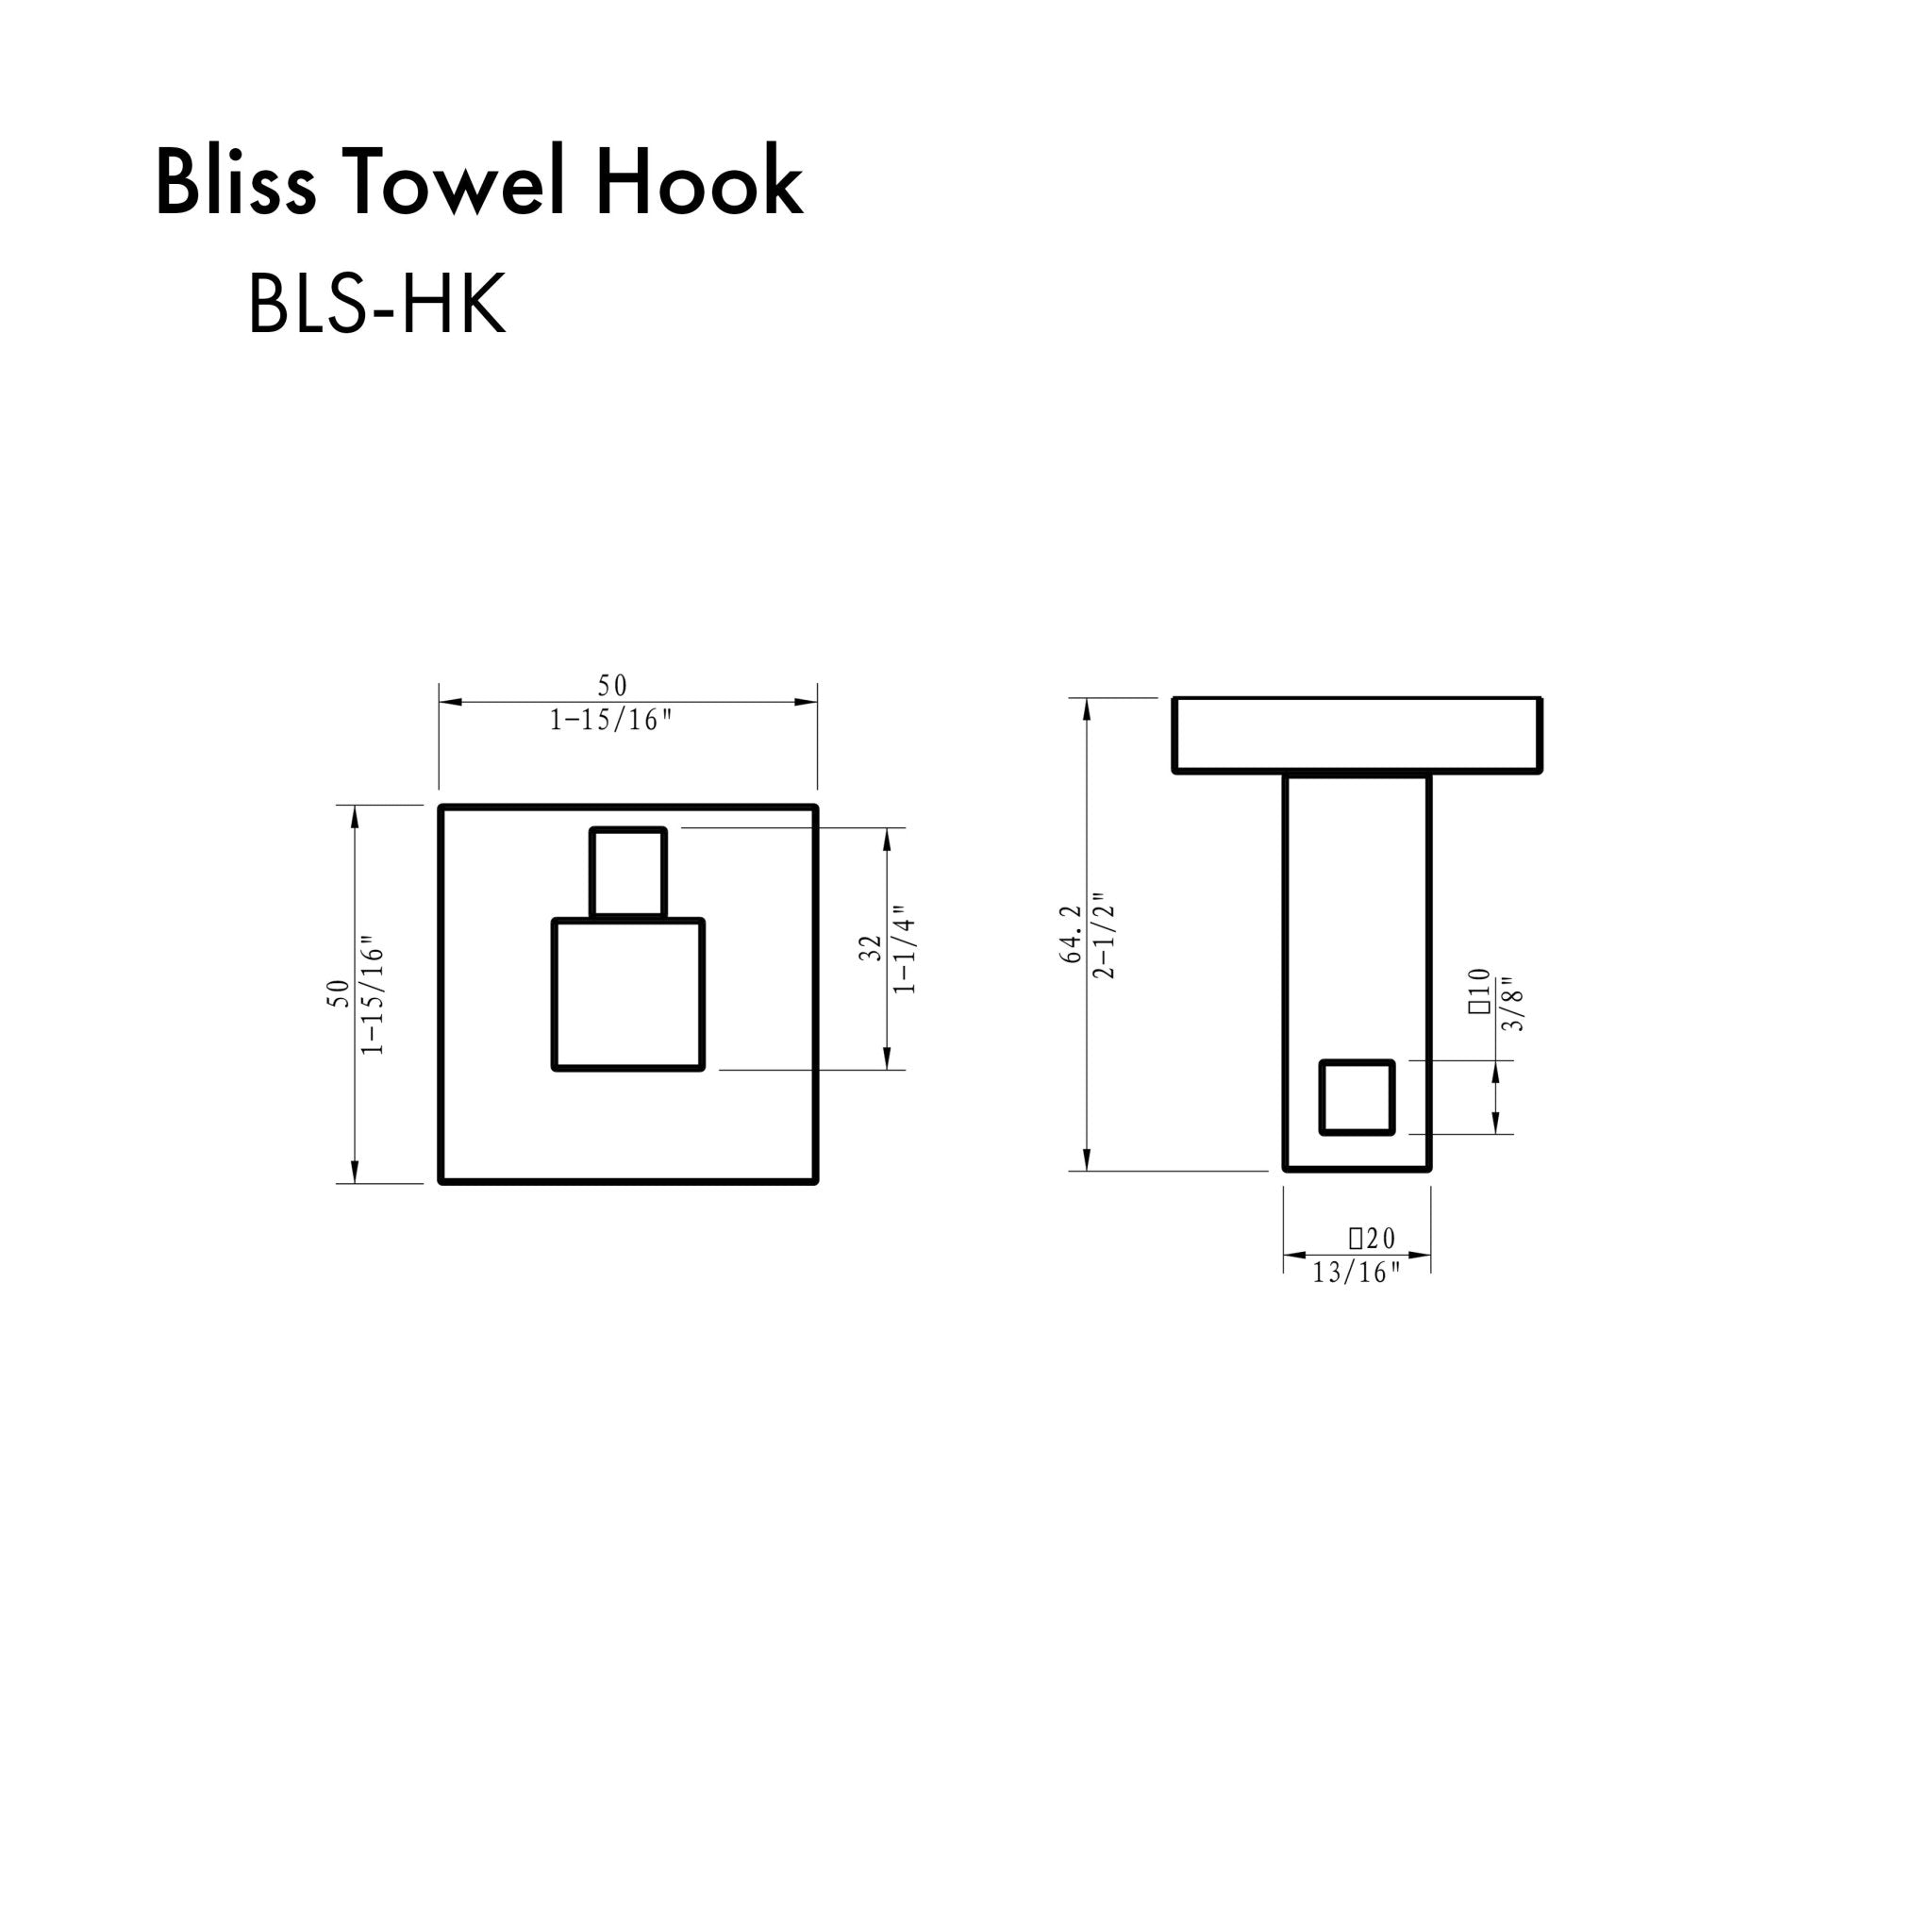 ZLINE Bliss Towel Hook With Color Options (BLS-HK) dimensional diagram